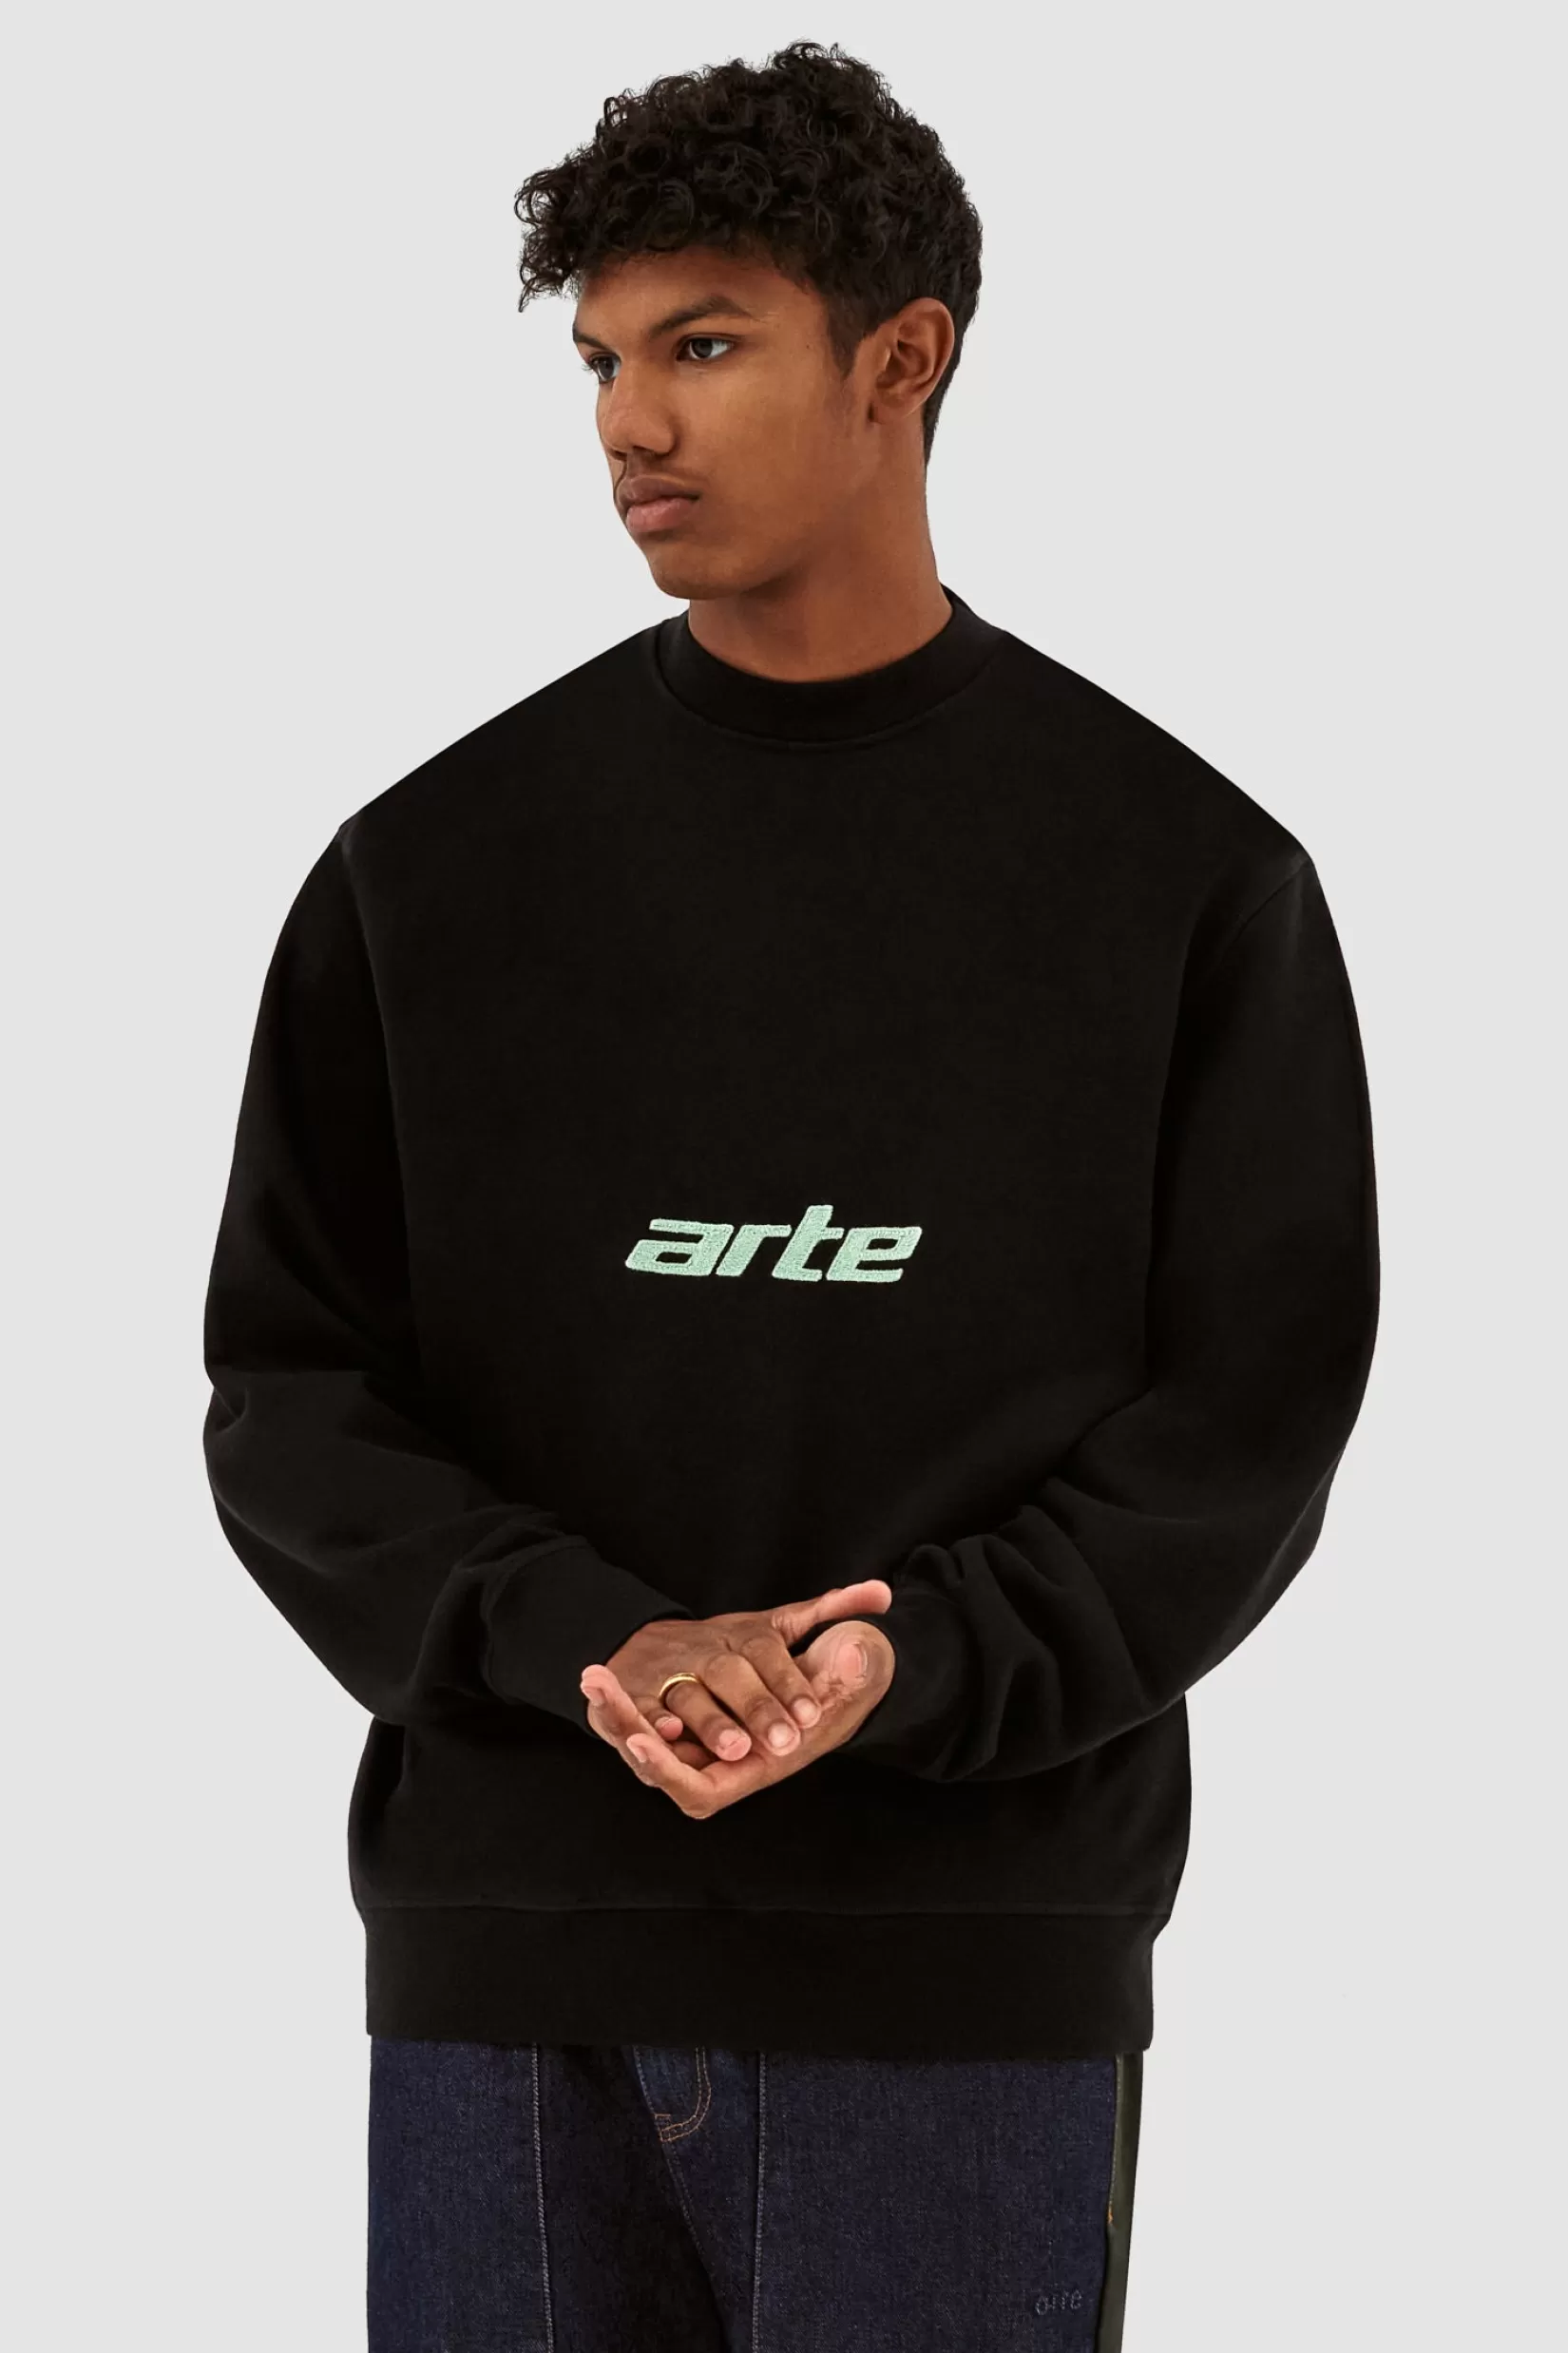 Cheap Carlos Arte Crewneck Sweaters